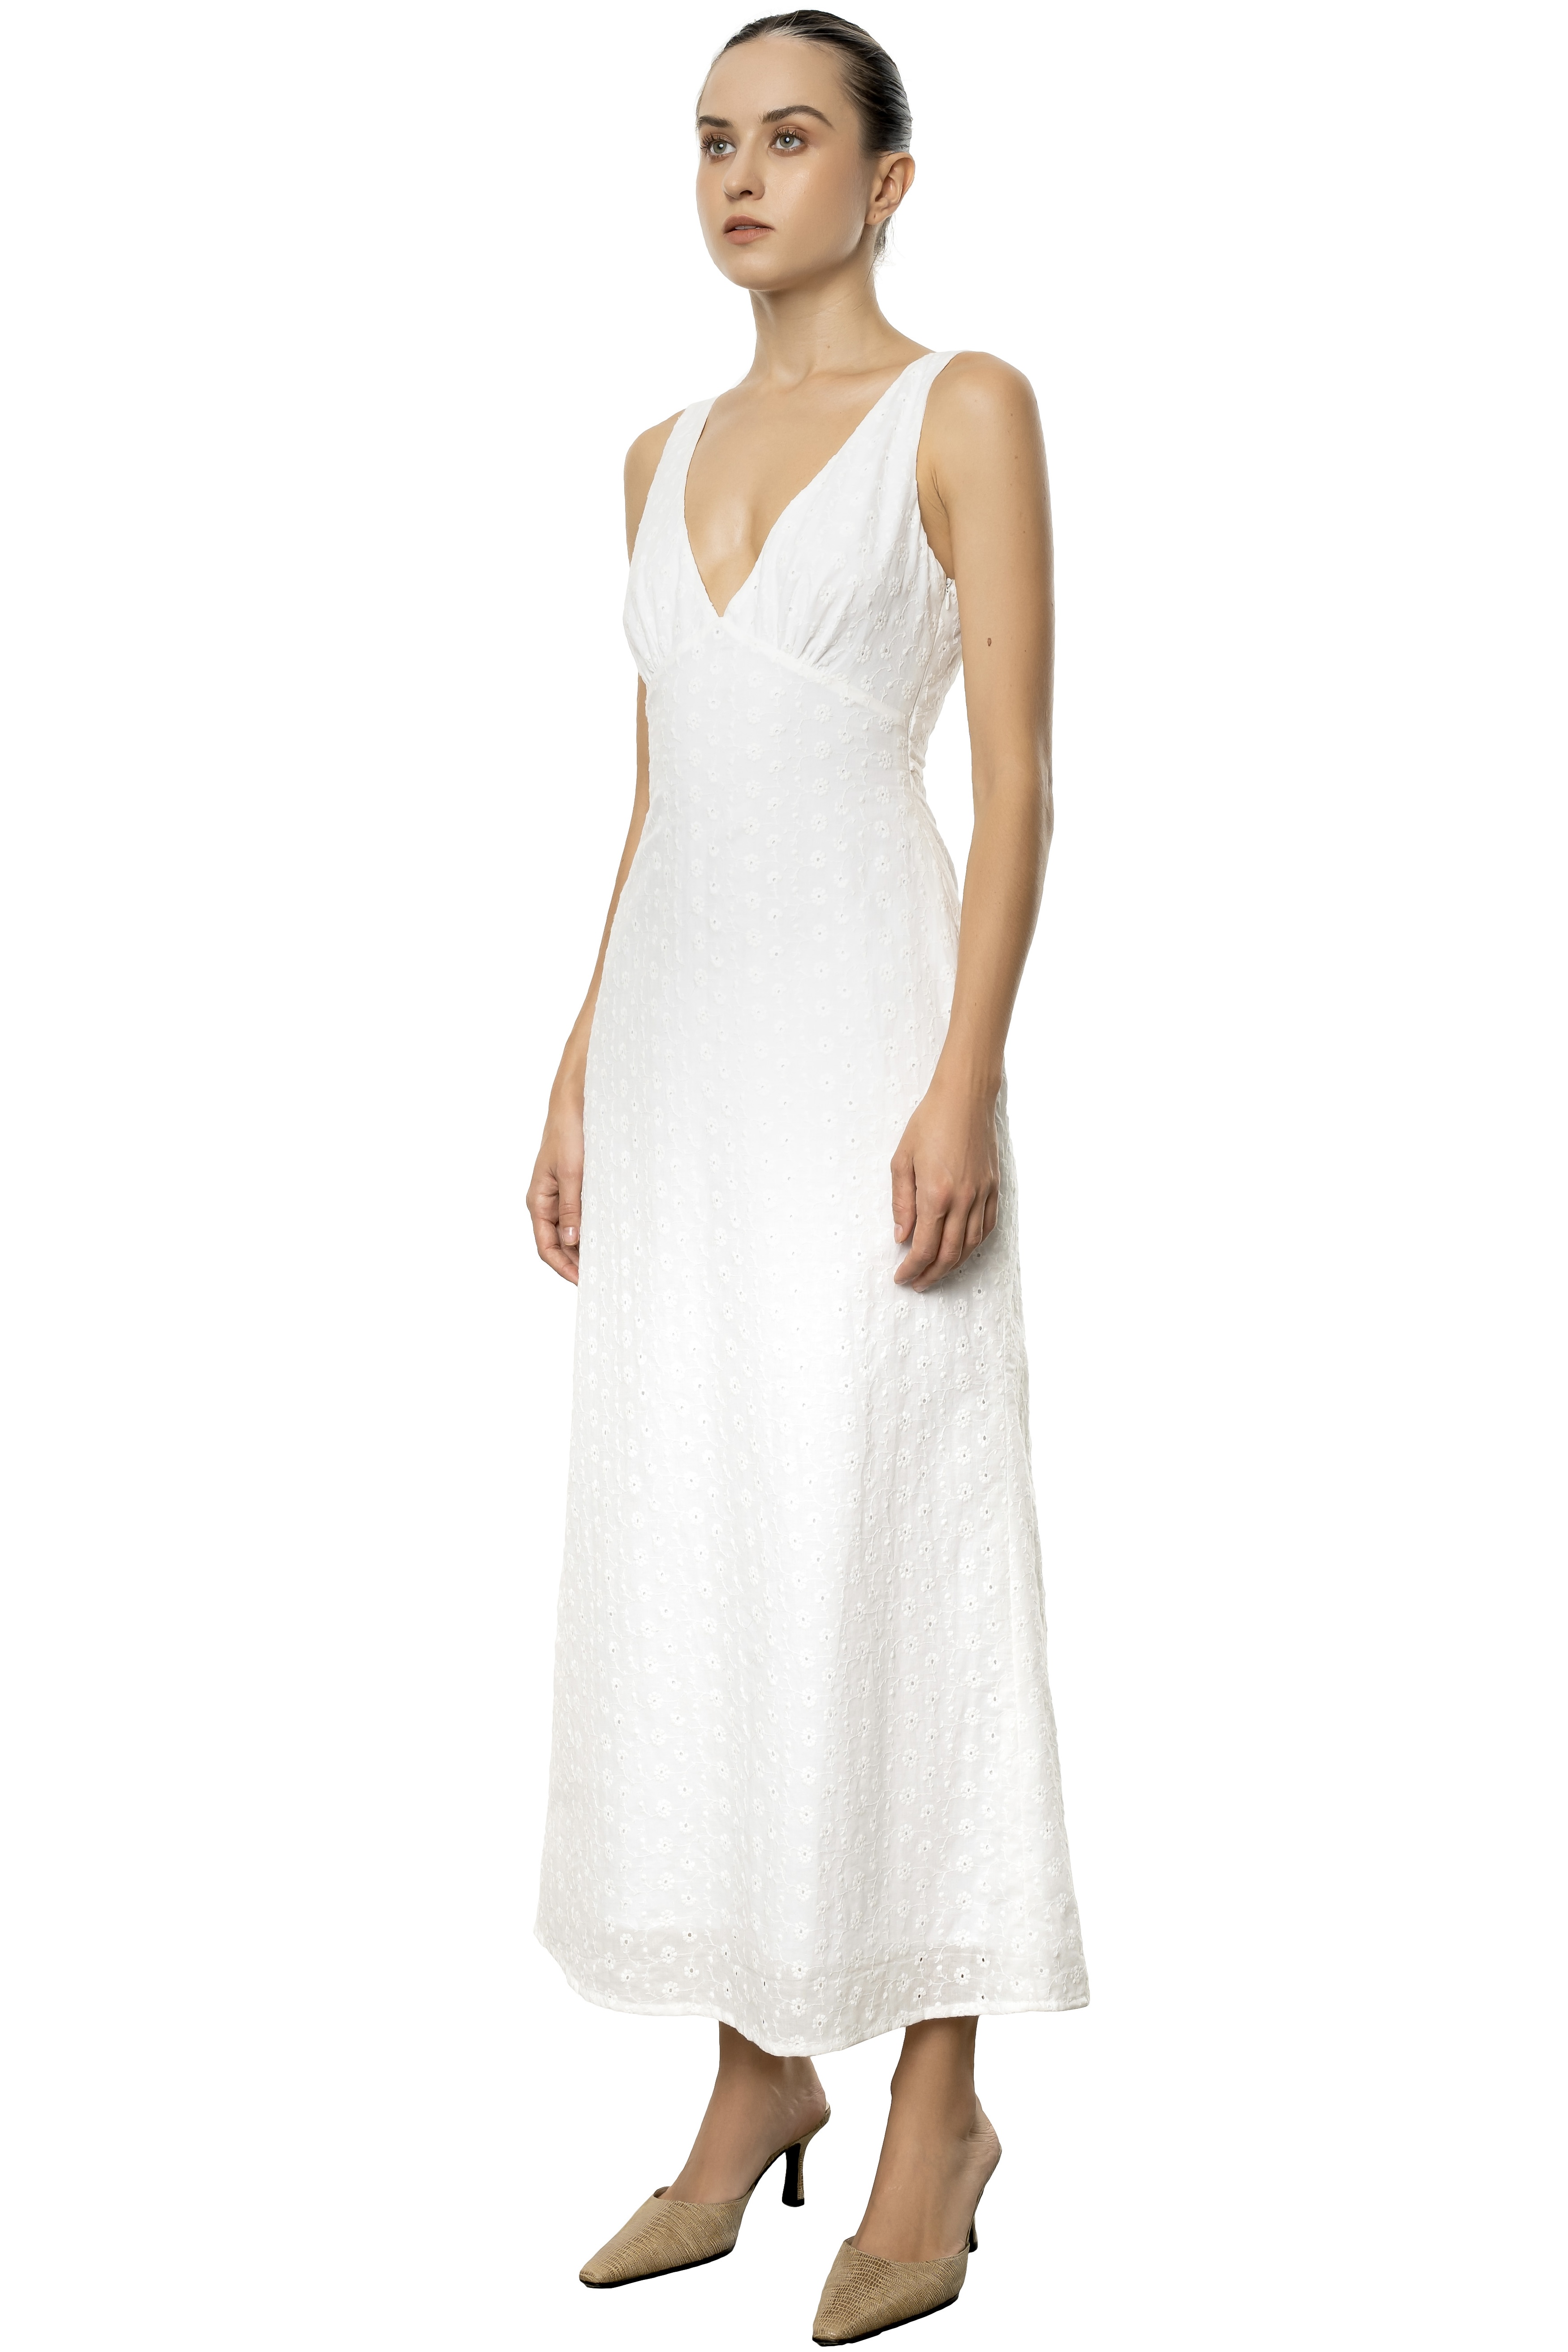 CAROL DRESS - WHITE 